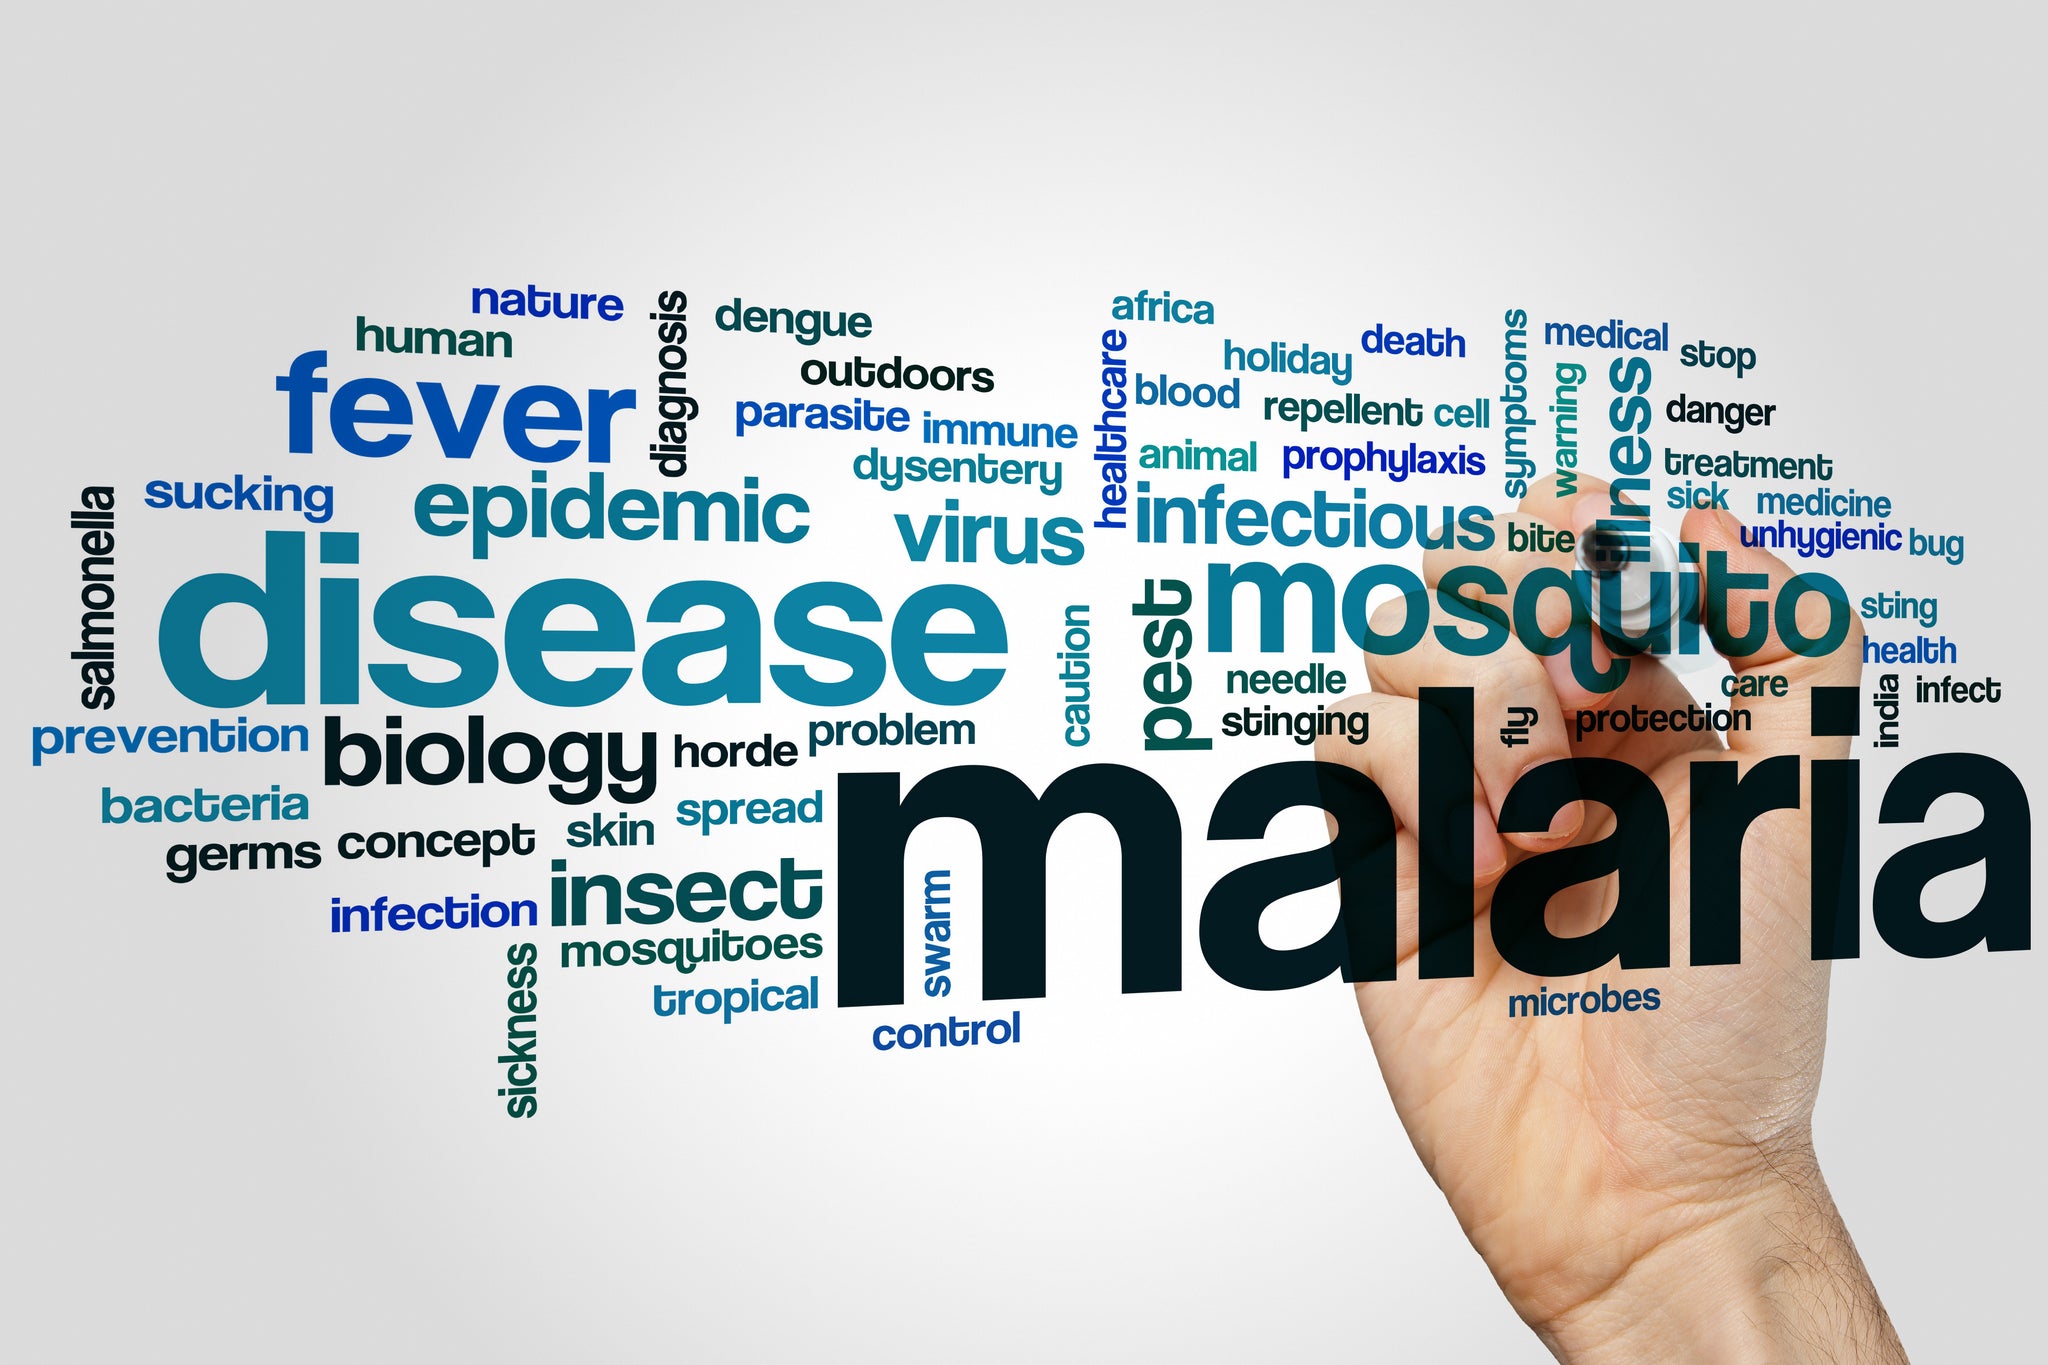 Malaria and Diarrhea